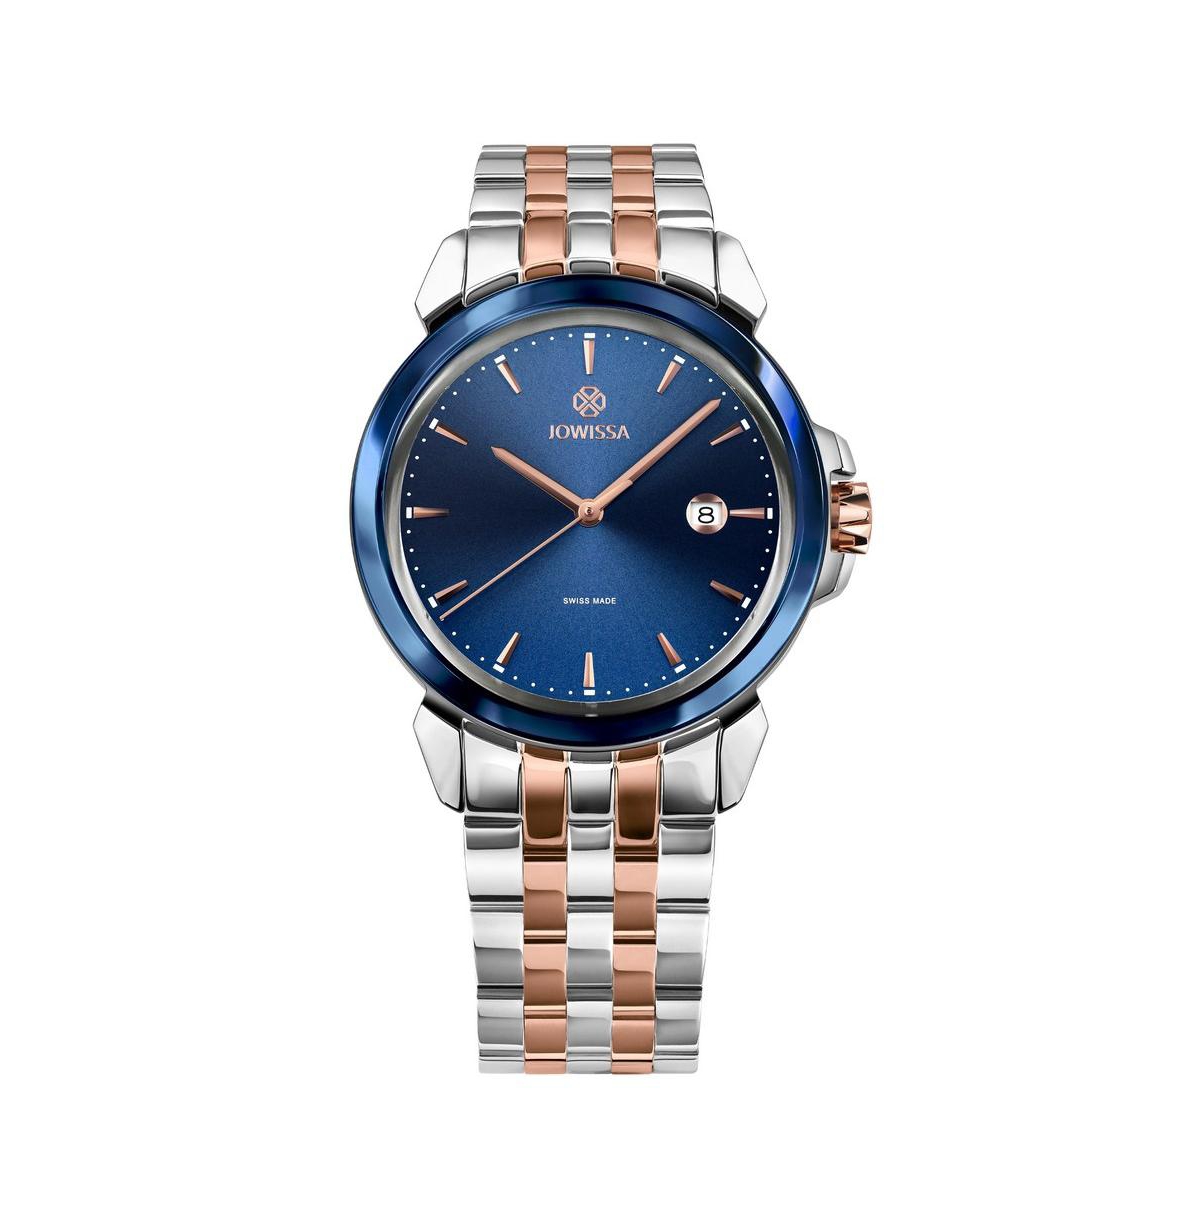 LeWy 3 Swiss Men's 42mm Watch - Blue & Rose Gold Dial - Blue